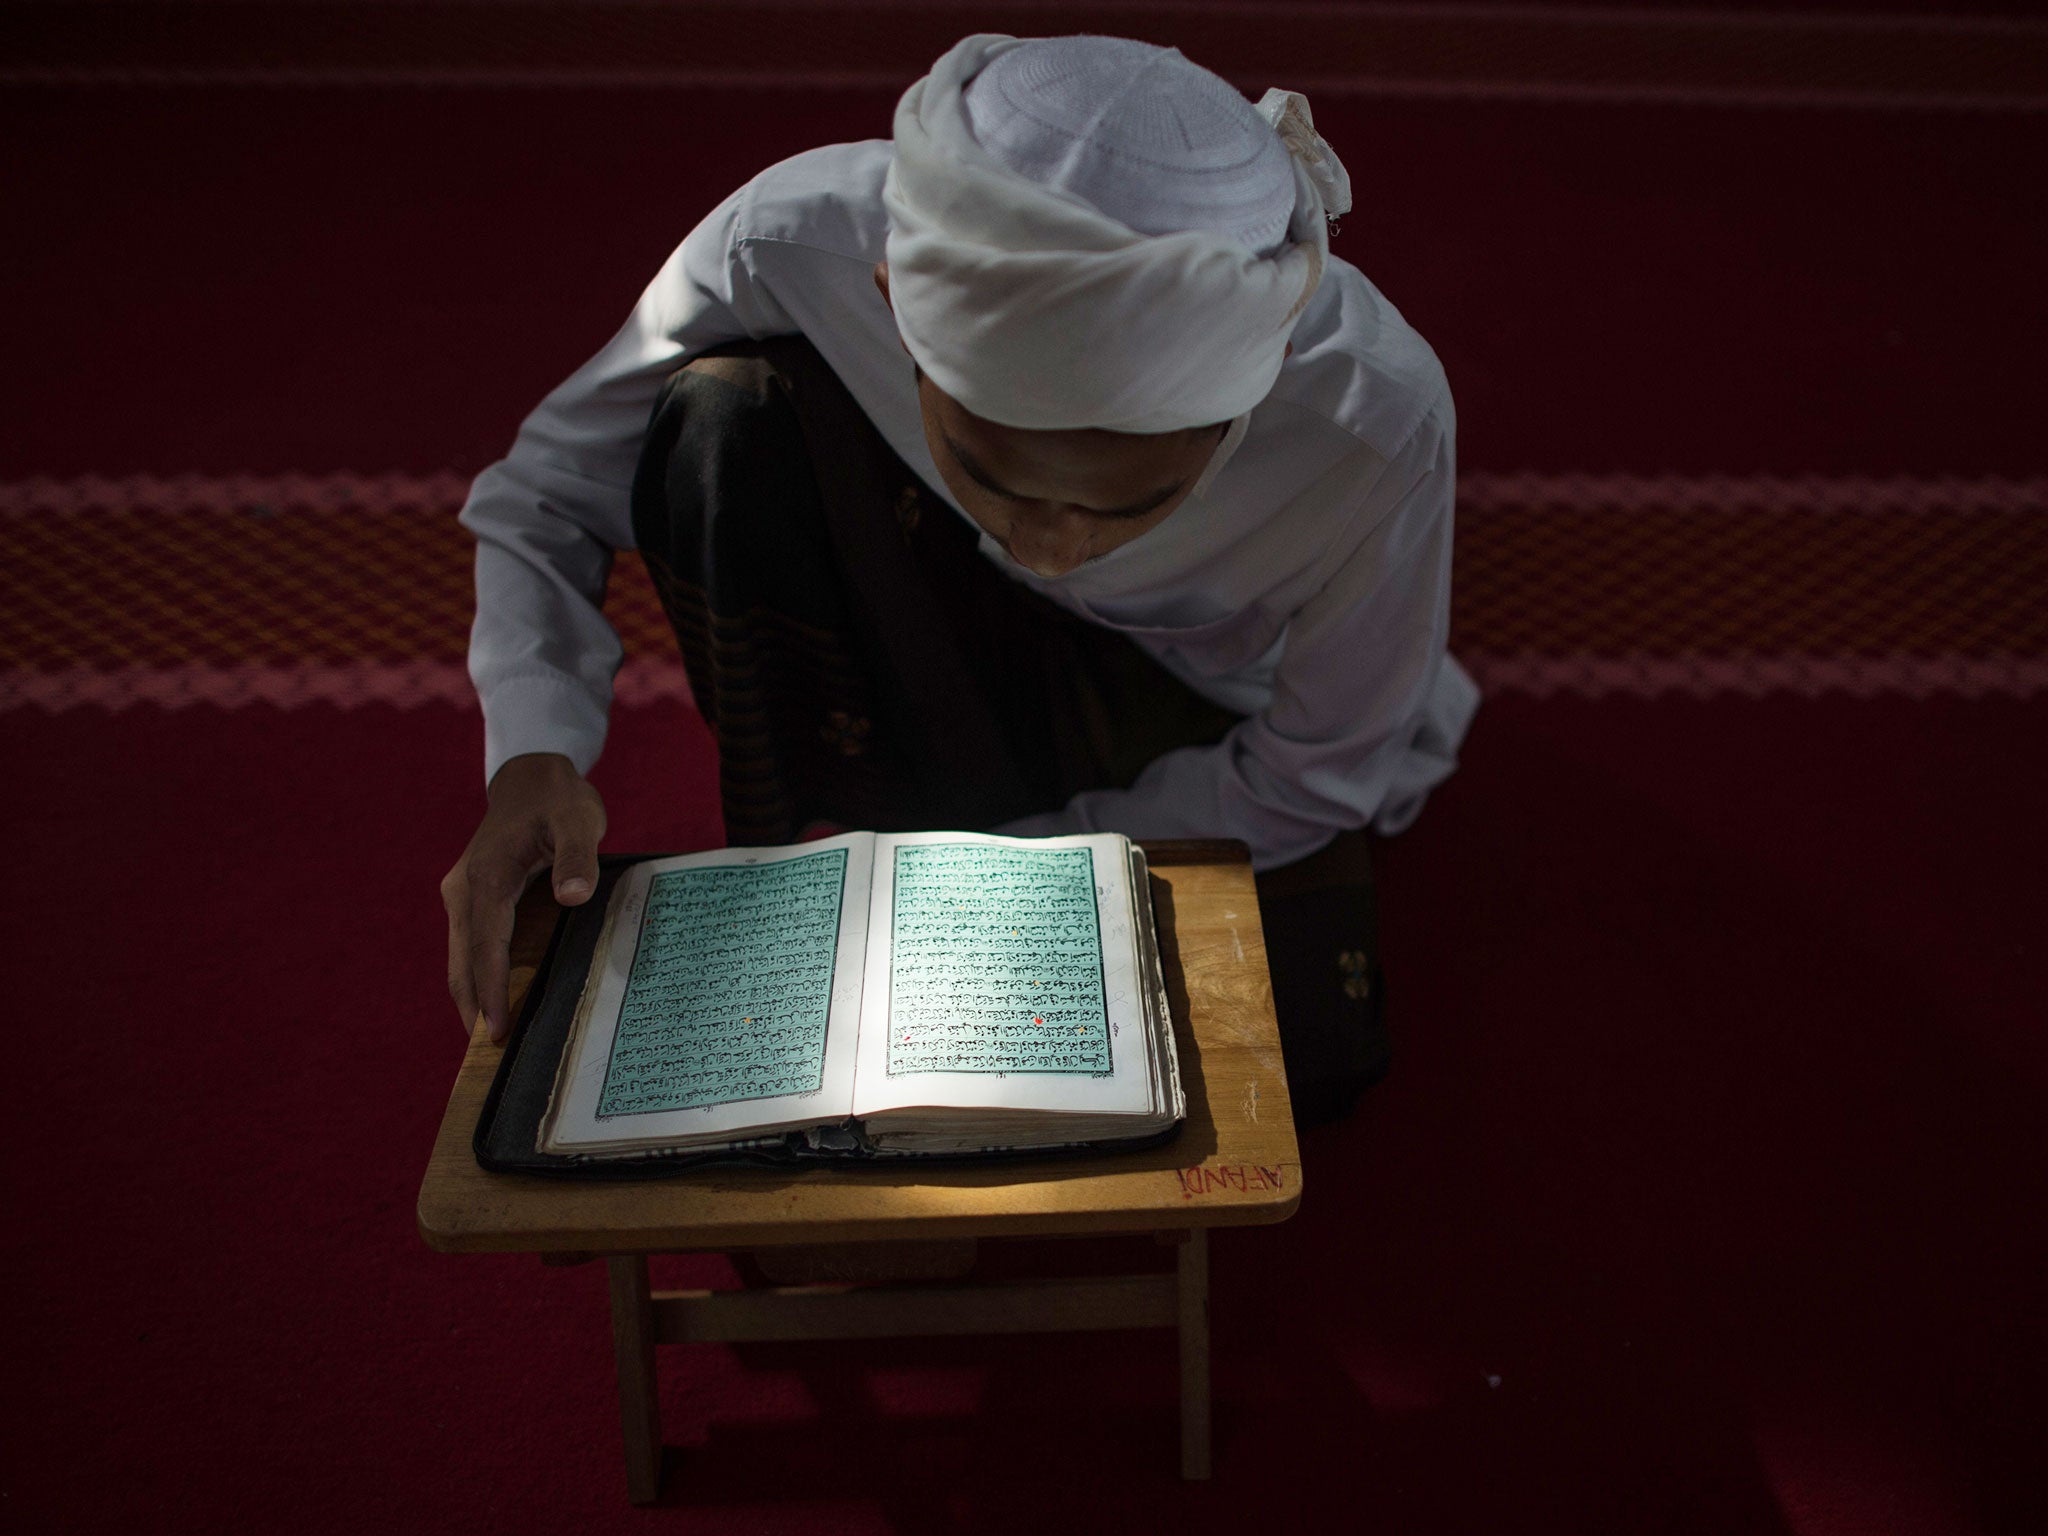 A Malaysian religious student reads the Koran at school during the Muslim holy fasting month of Ramadan in Hulu Langat, near Kuala Lumpur